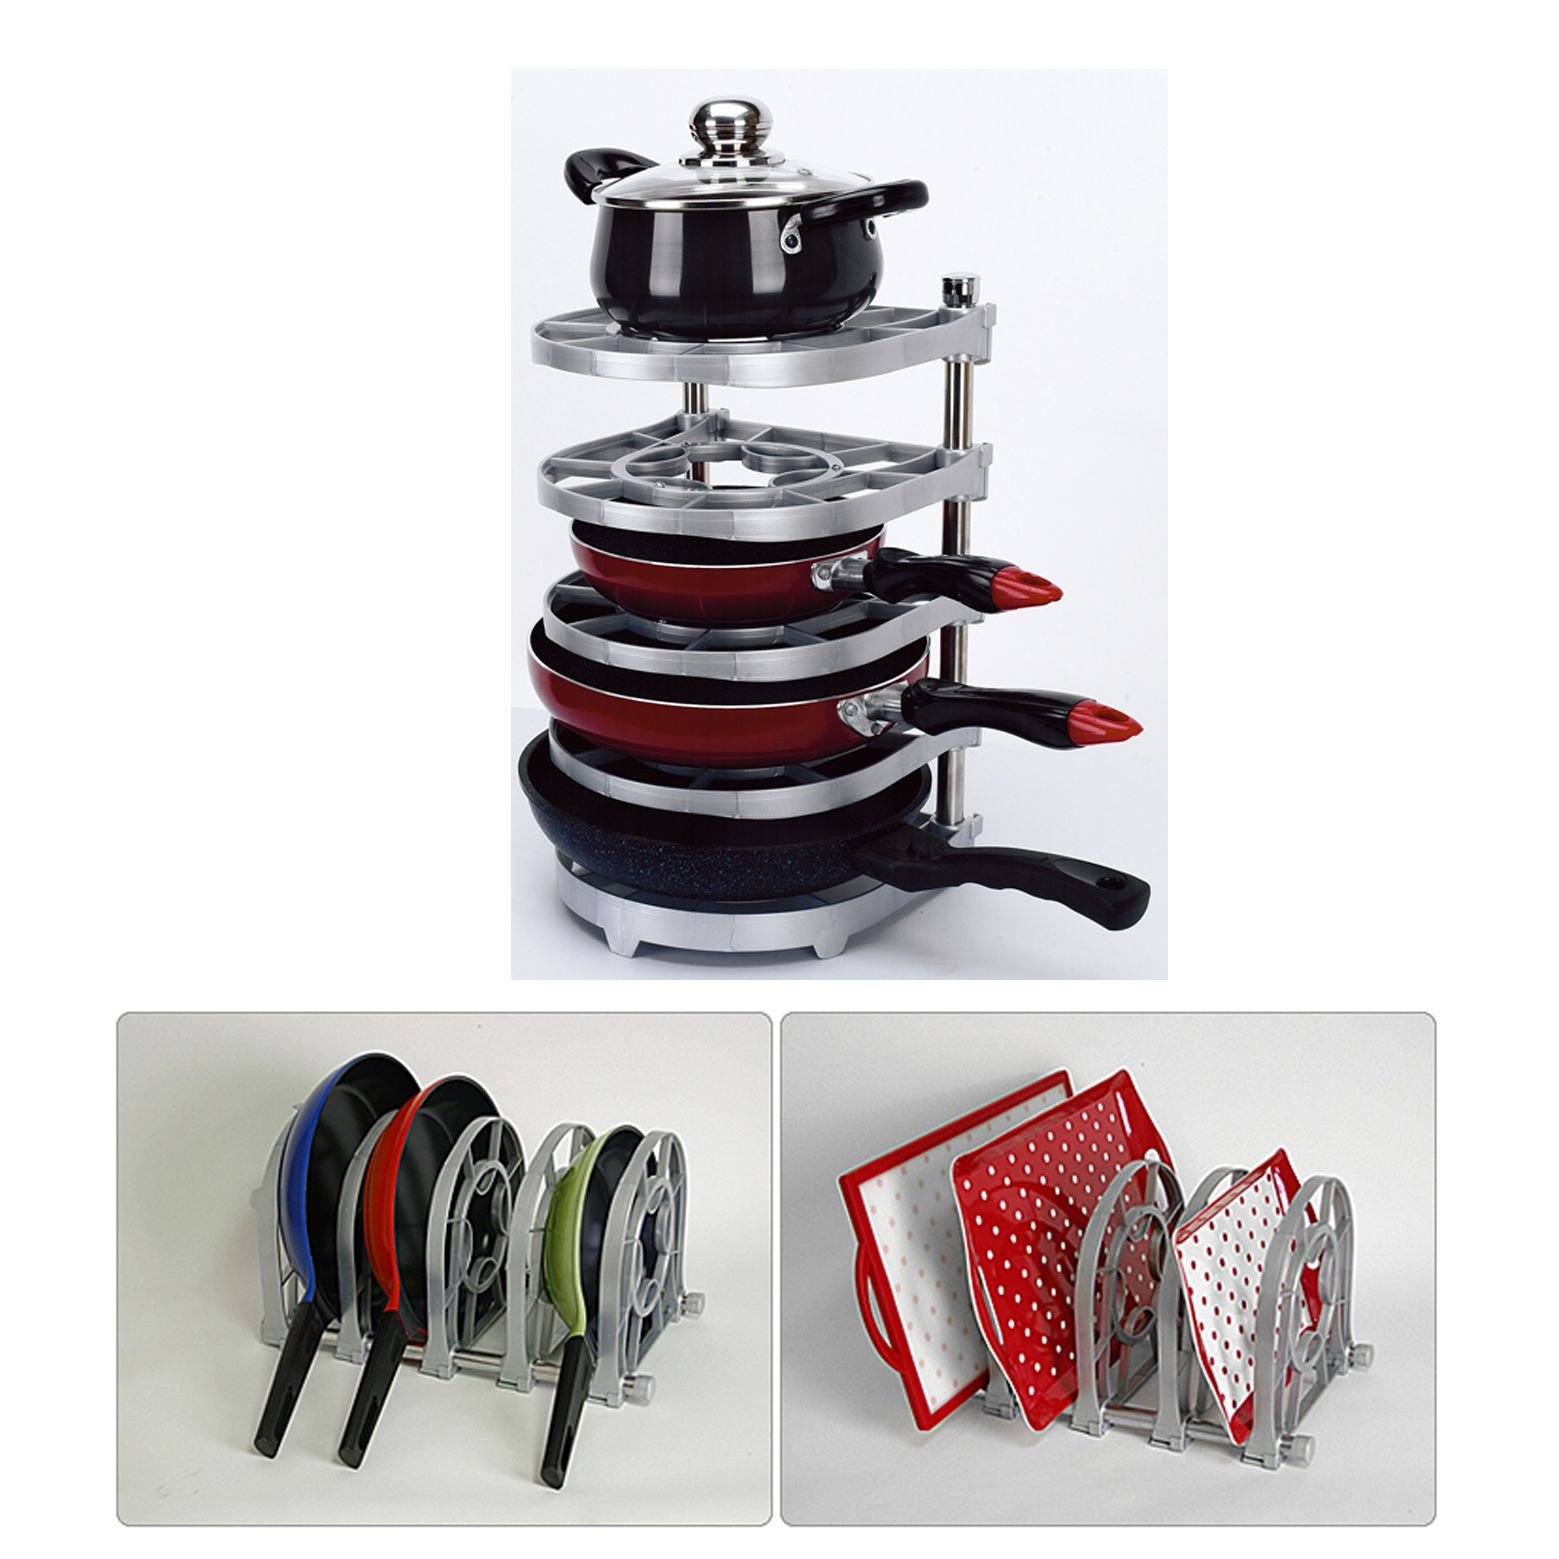 Kitchen Pots And Pans Organizer
 New Pan and Pot Organizer Rack Multi Uses Kitchen Rack